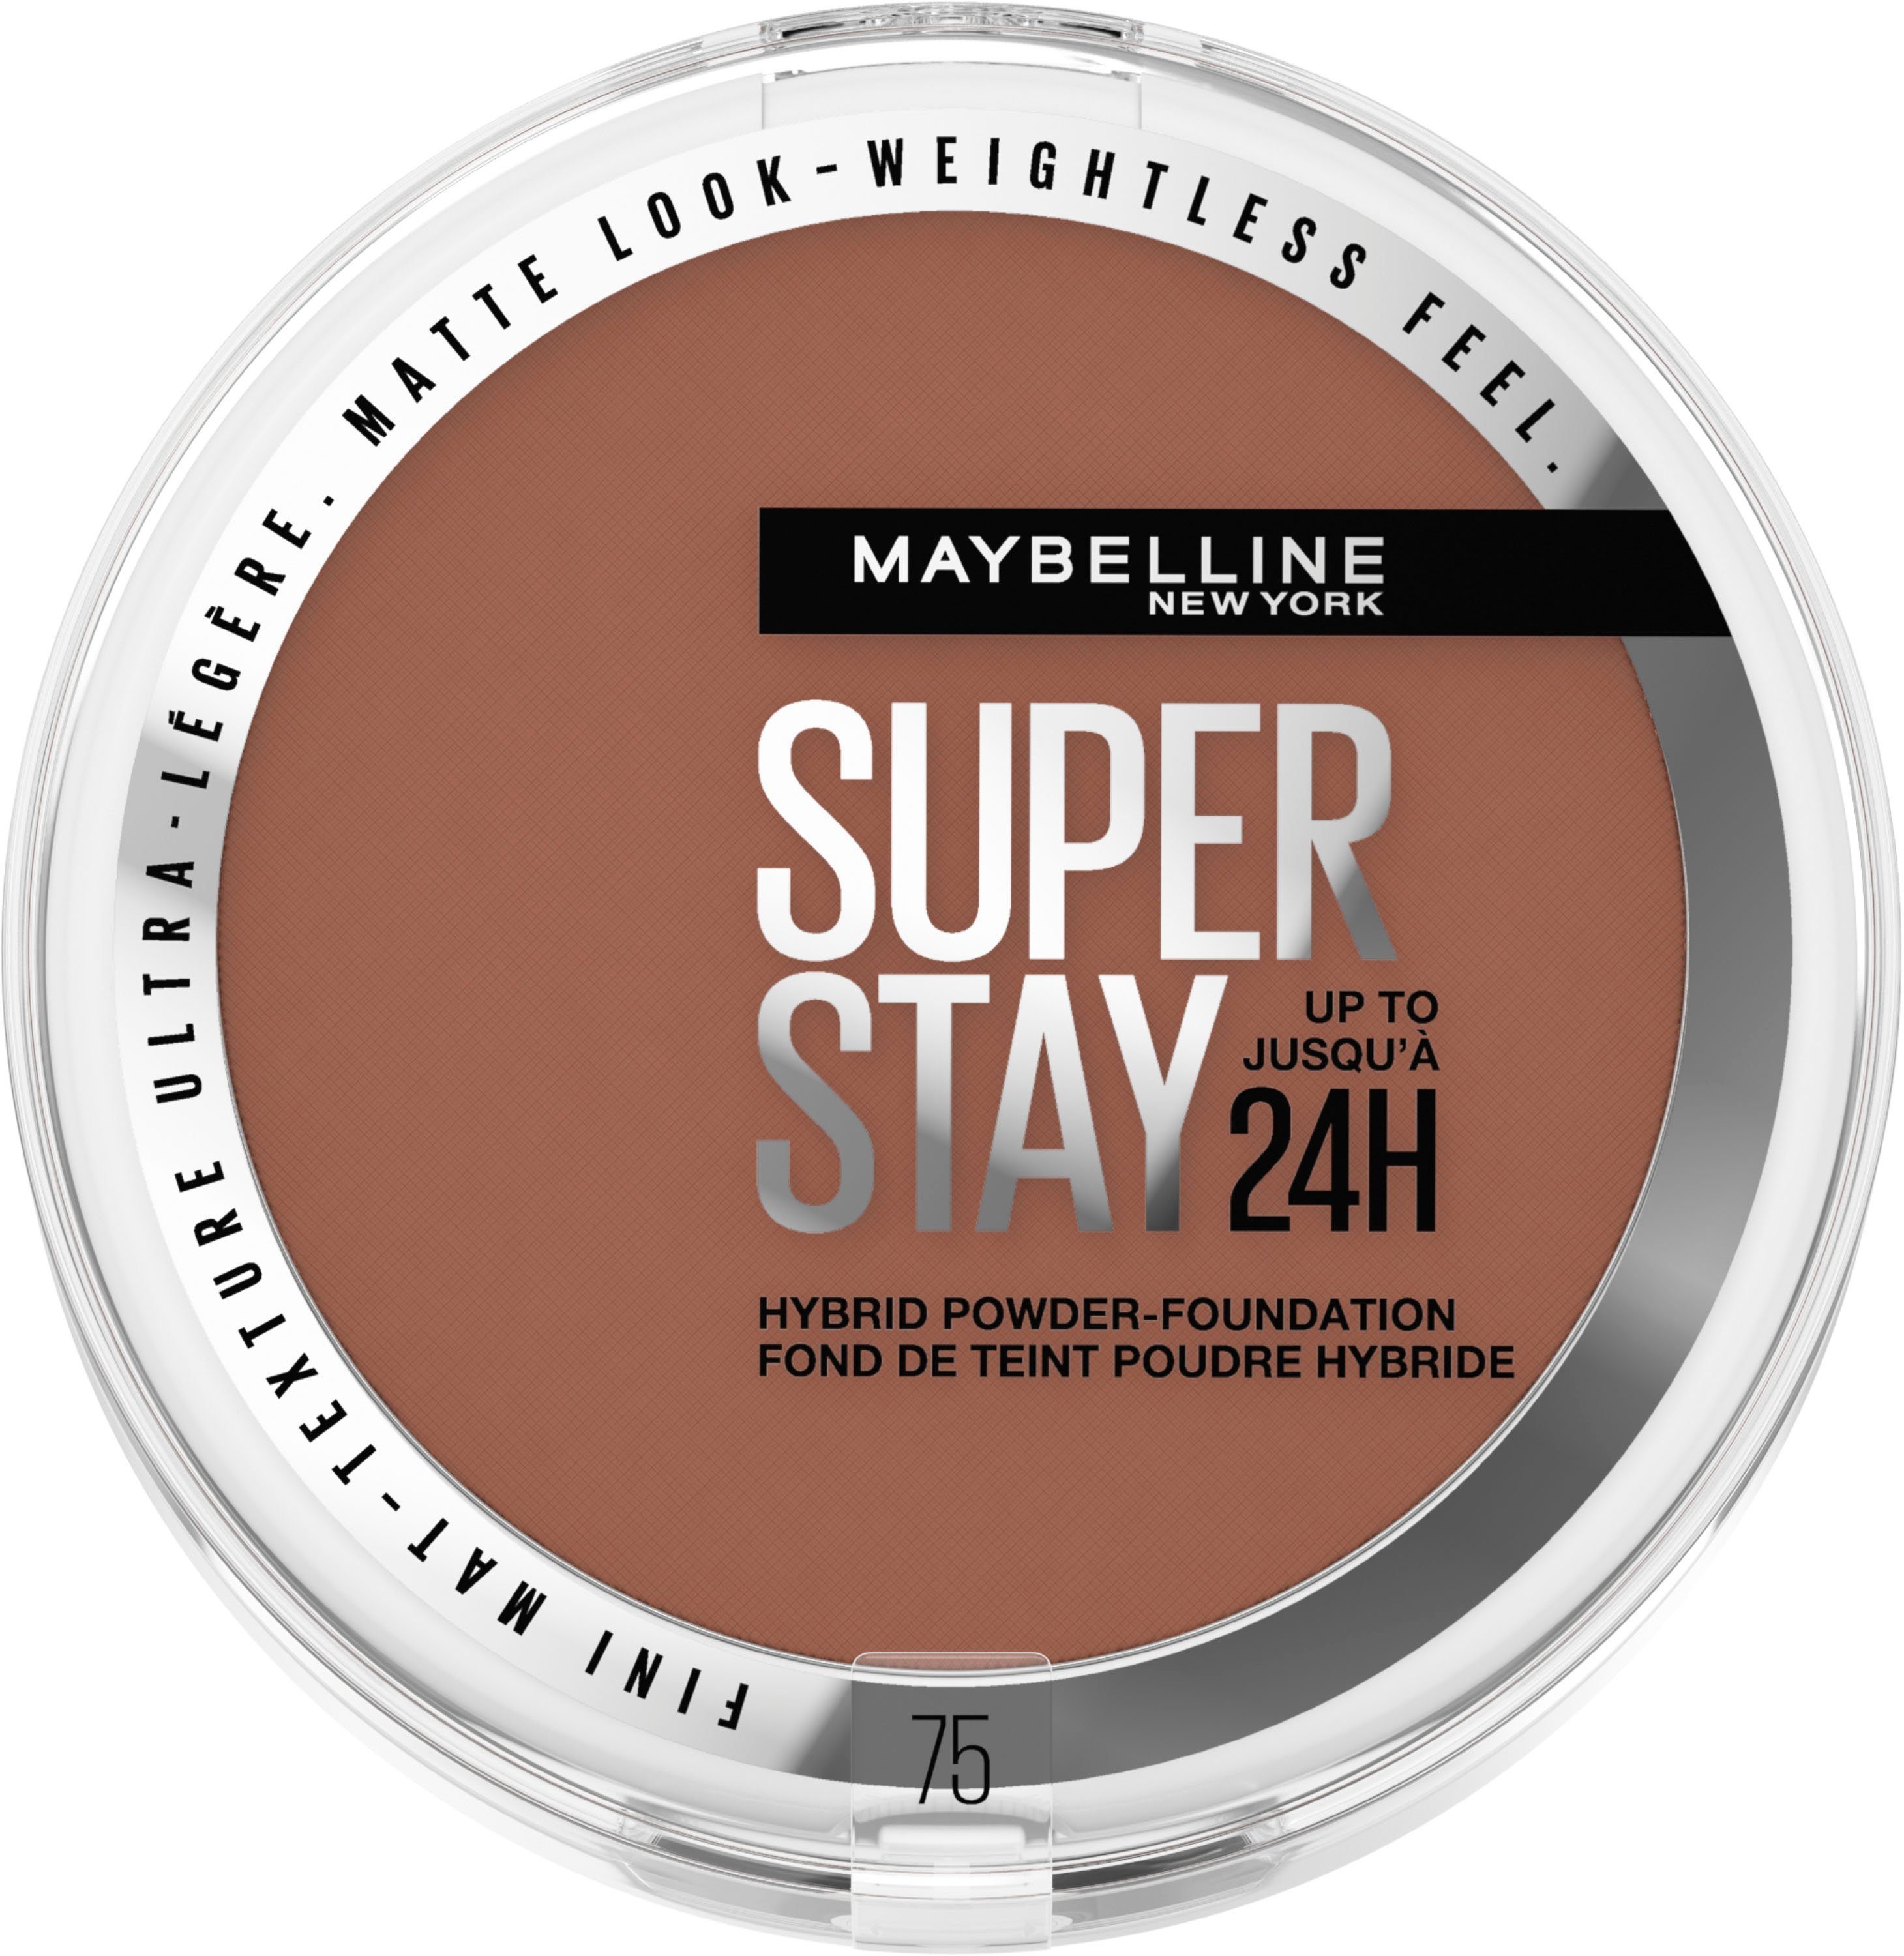 Super Make-Up YORK York Stay Hybrides New MAYBELLINE NEW Foundation Puder Maybelline